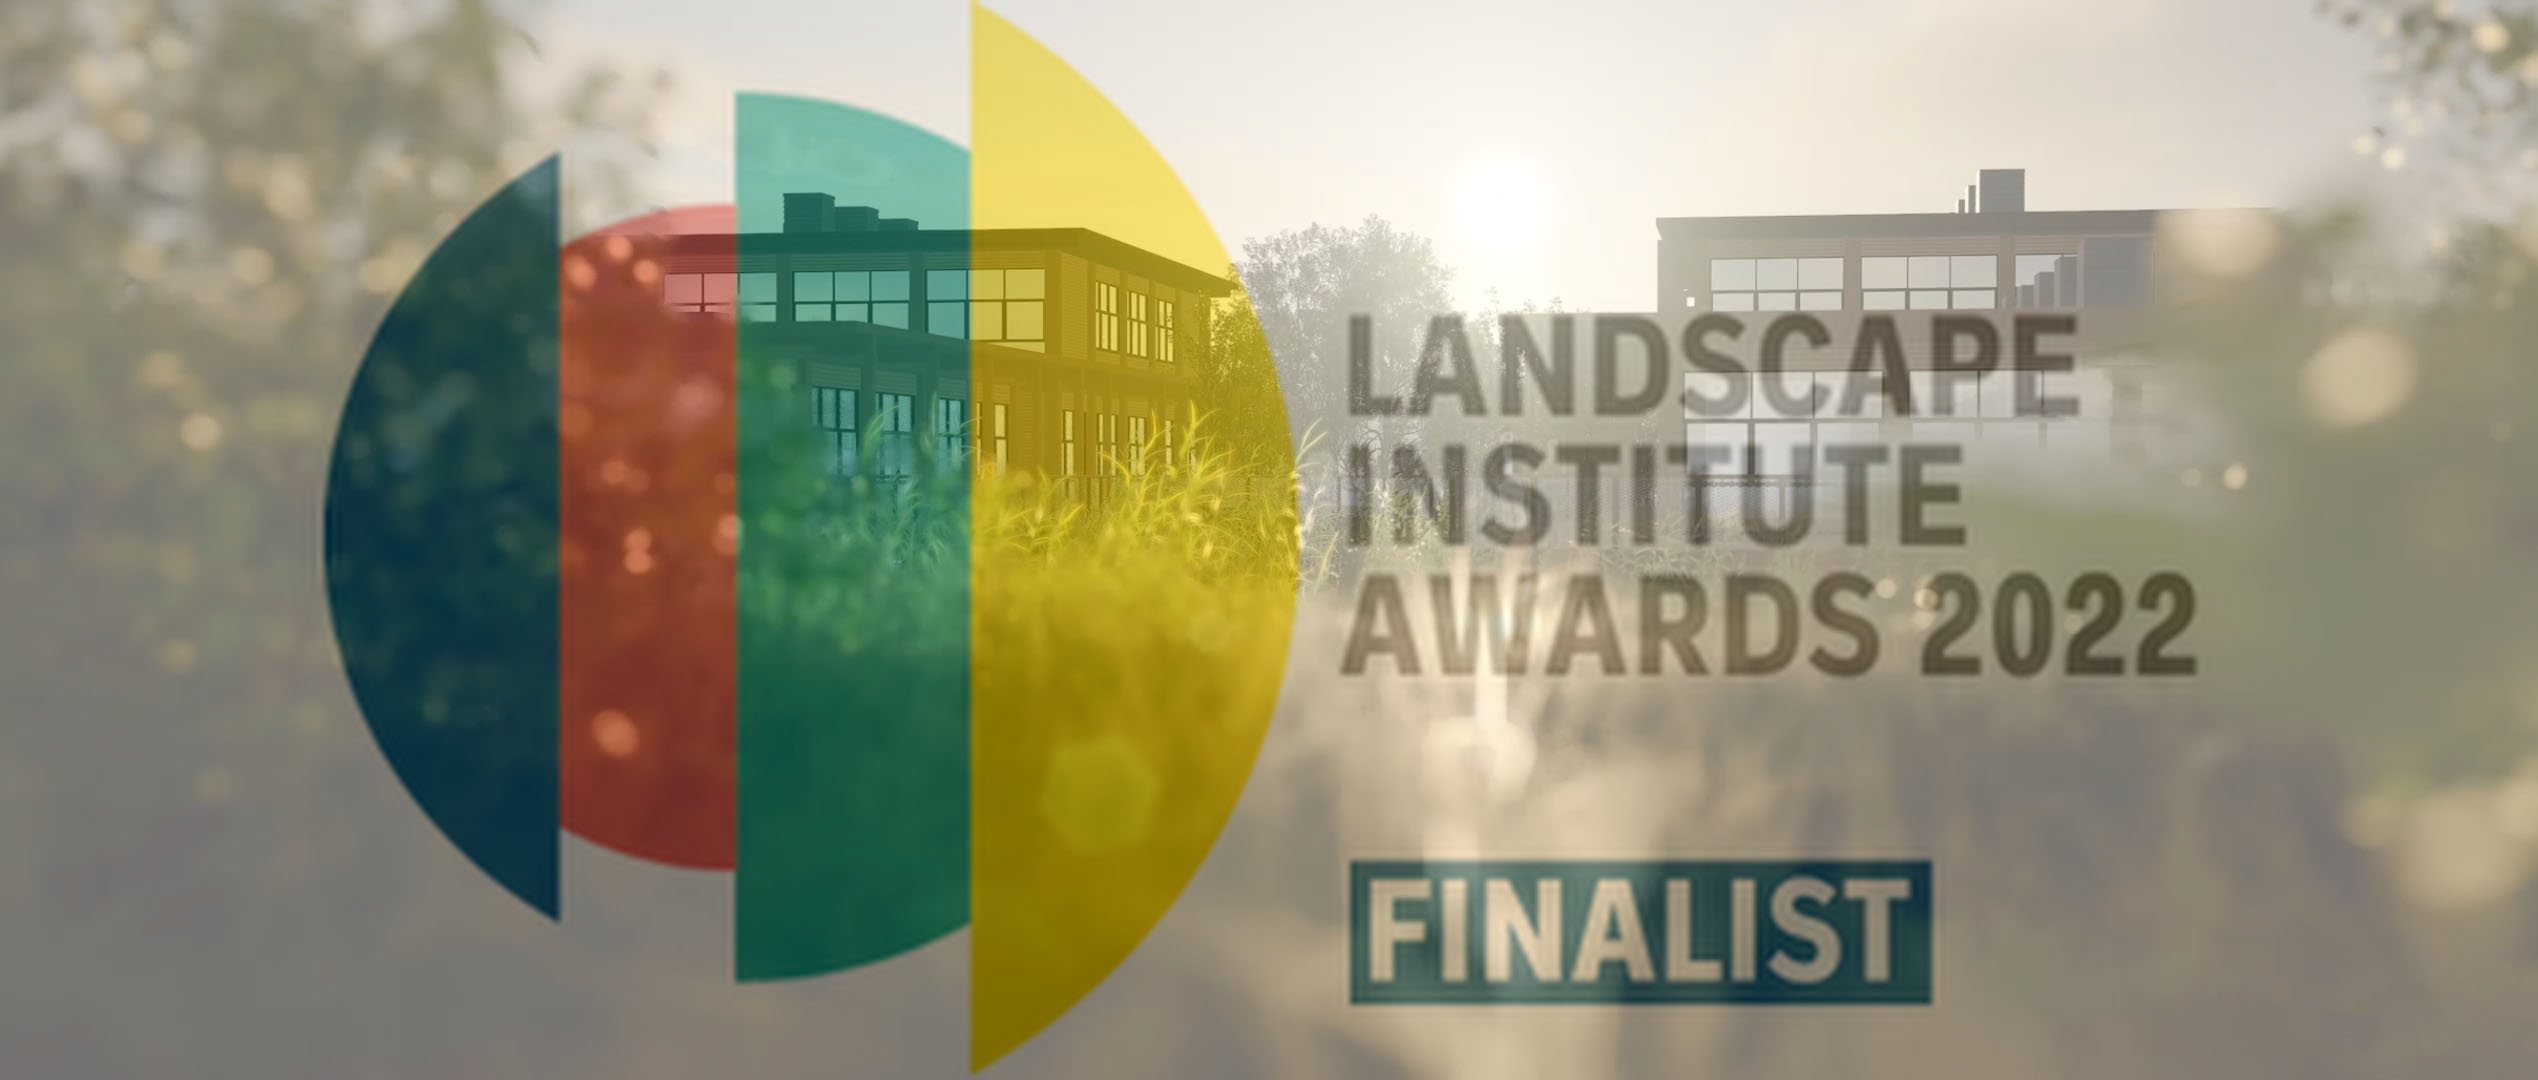 Shortlisted for a Landscape Institute Award